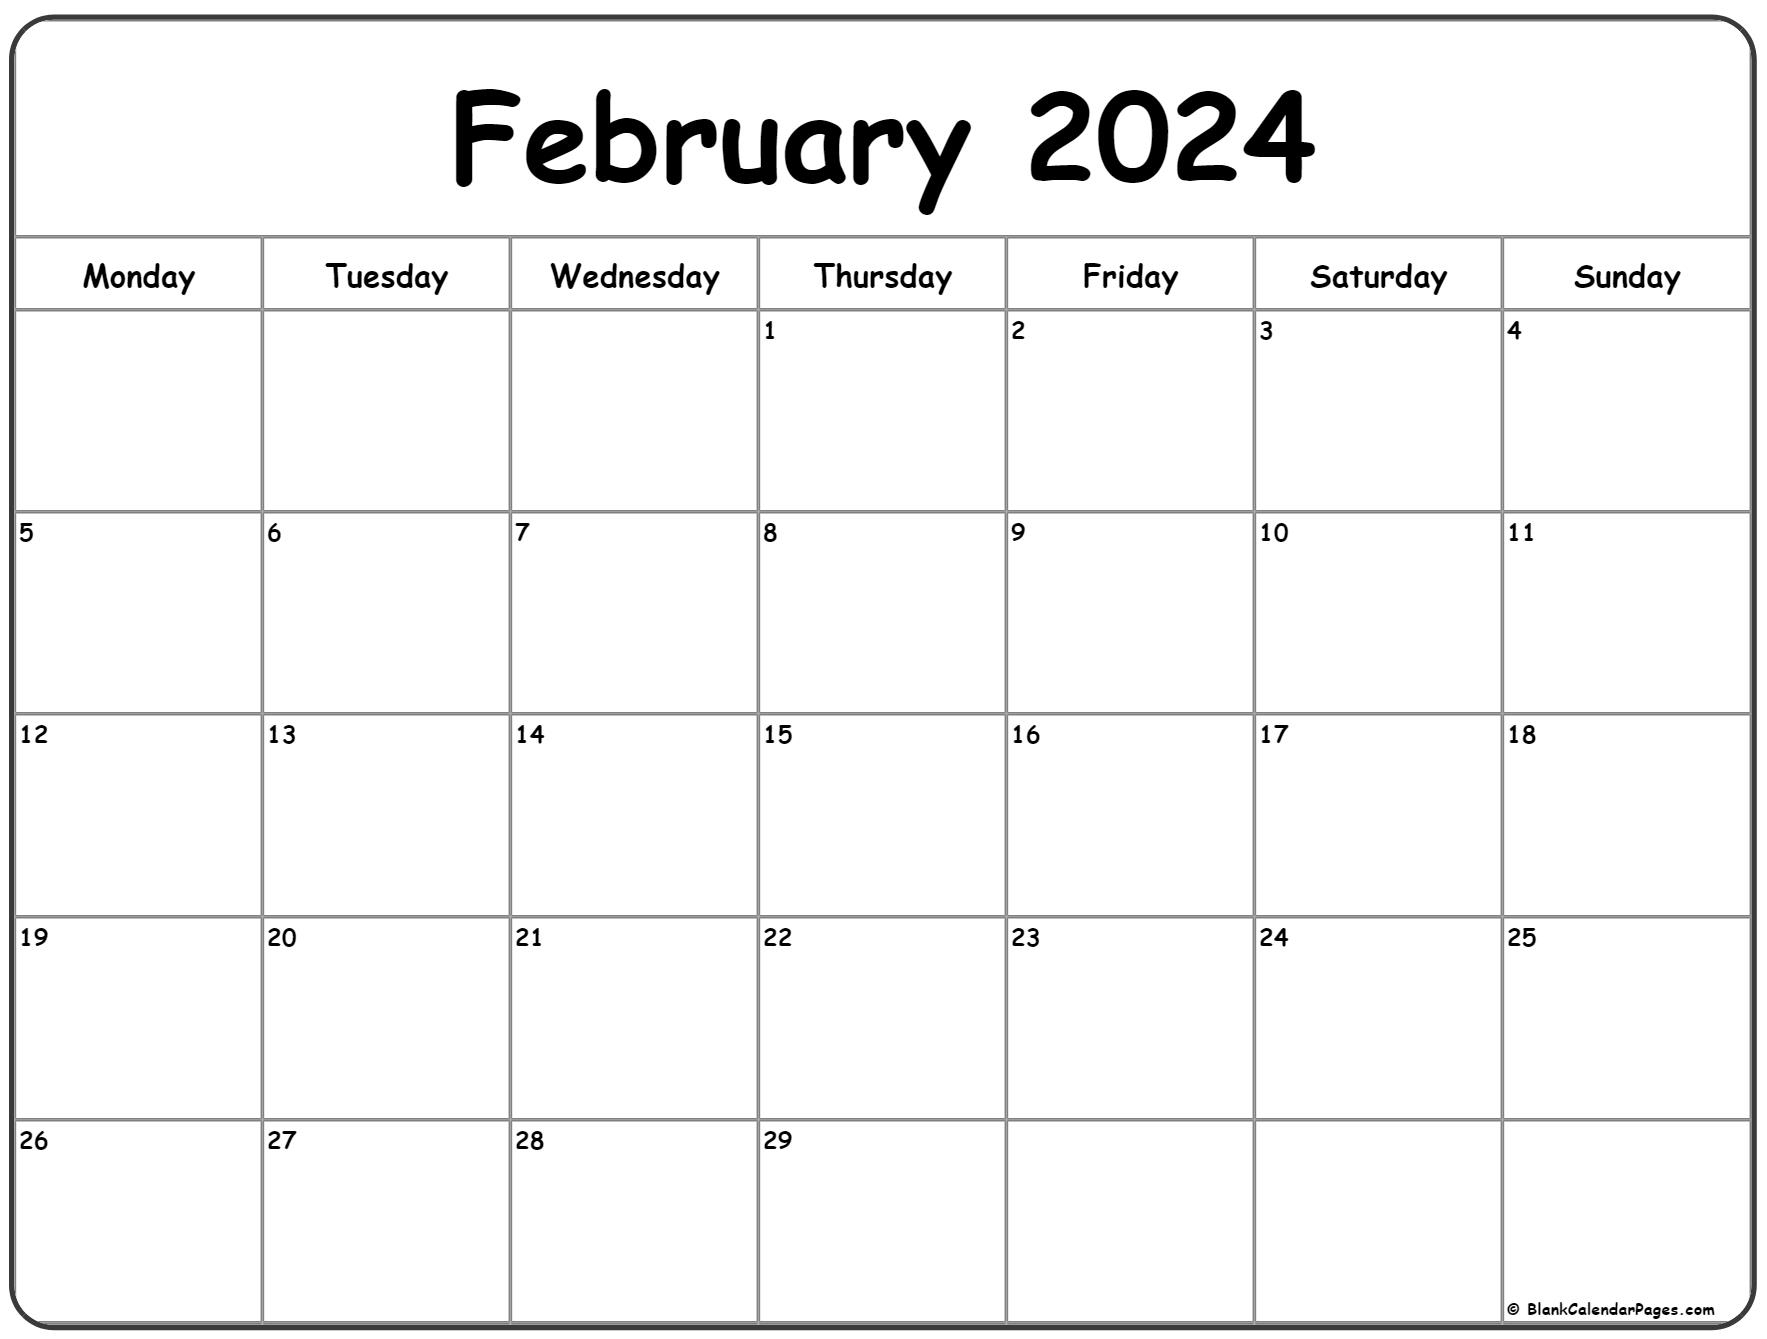 February 2024 Monday Calendar | Monday To Sunday for February Calendar 2024 Printable Free